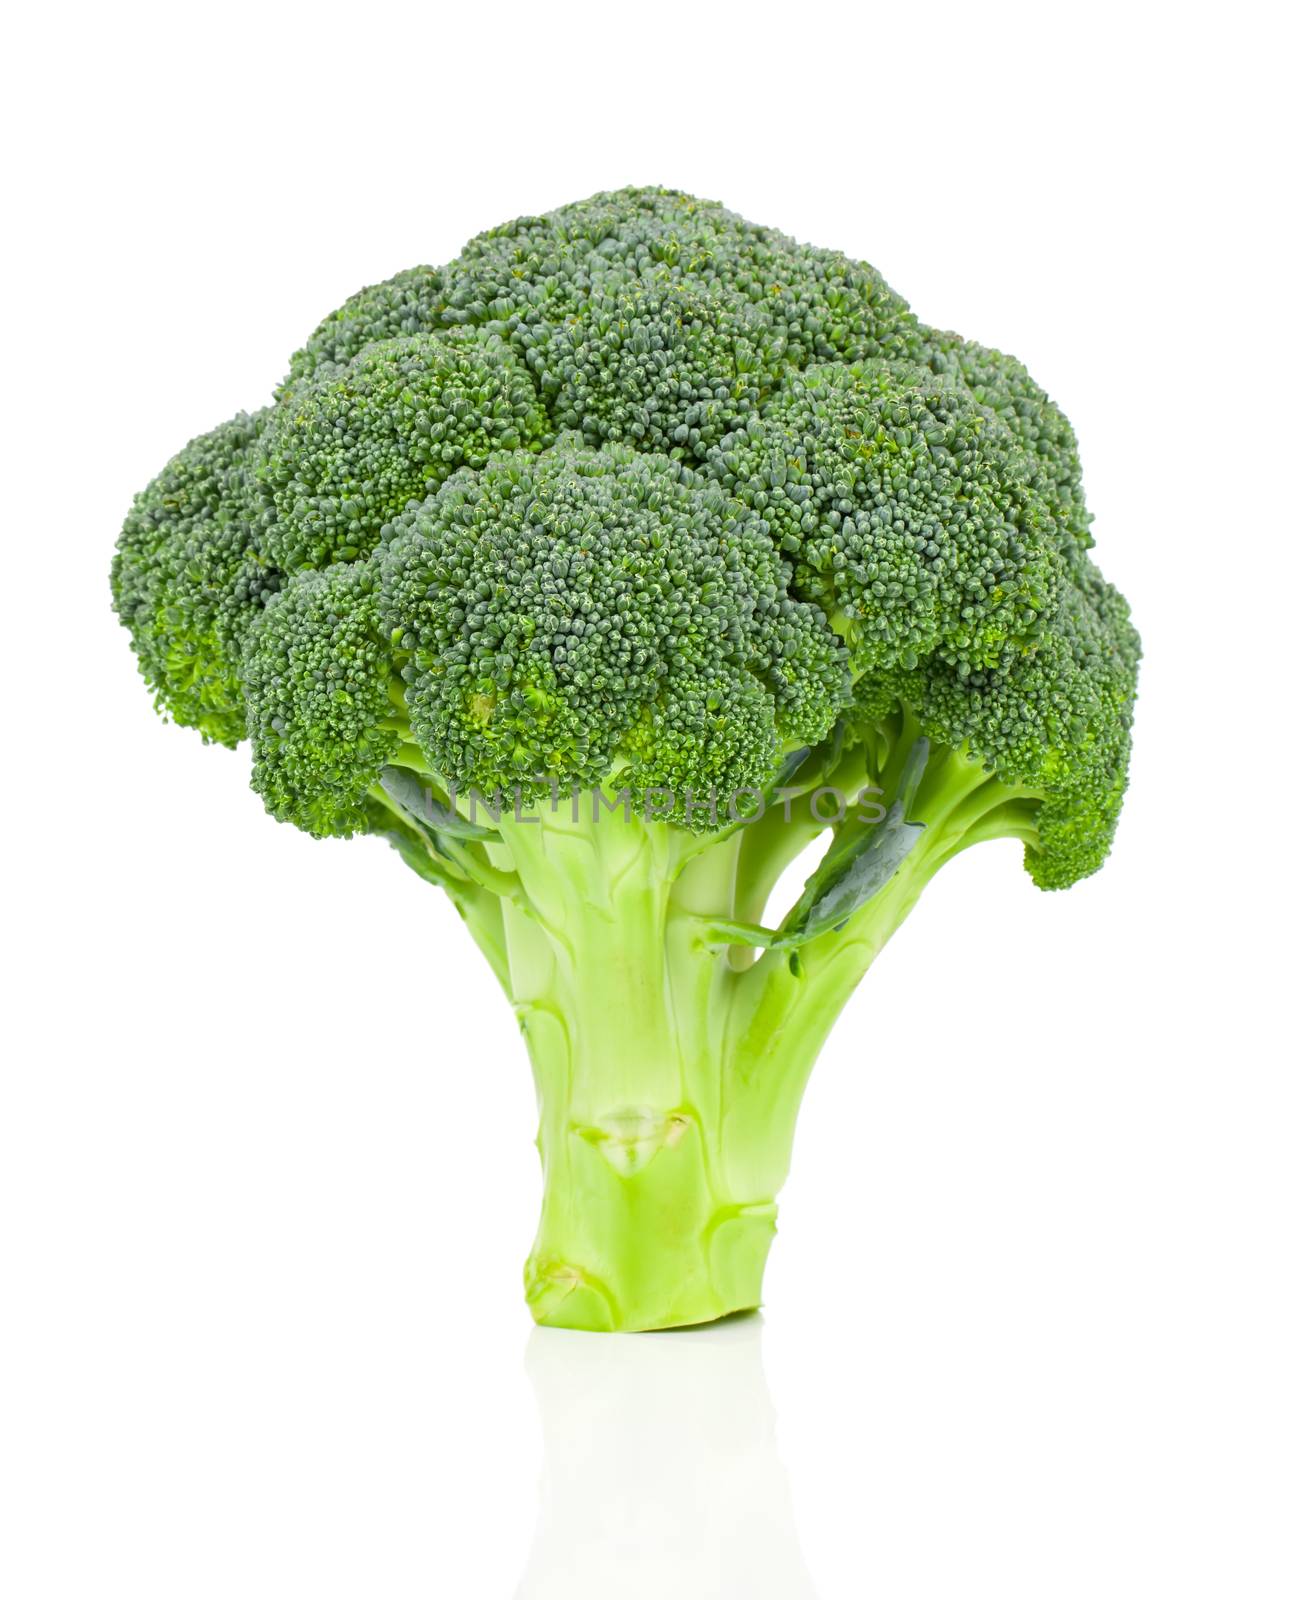 Broccoli isolated on white background by motorolka